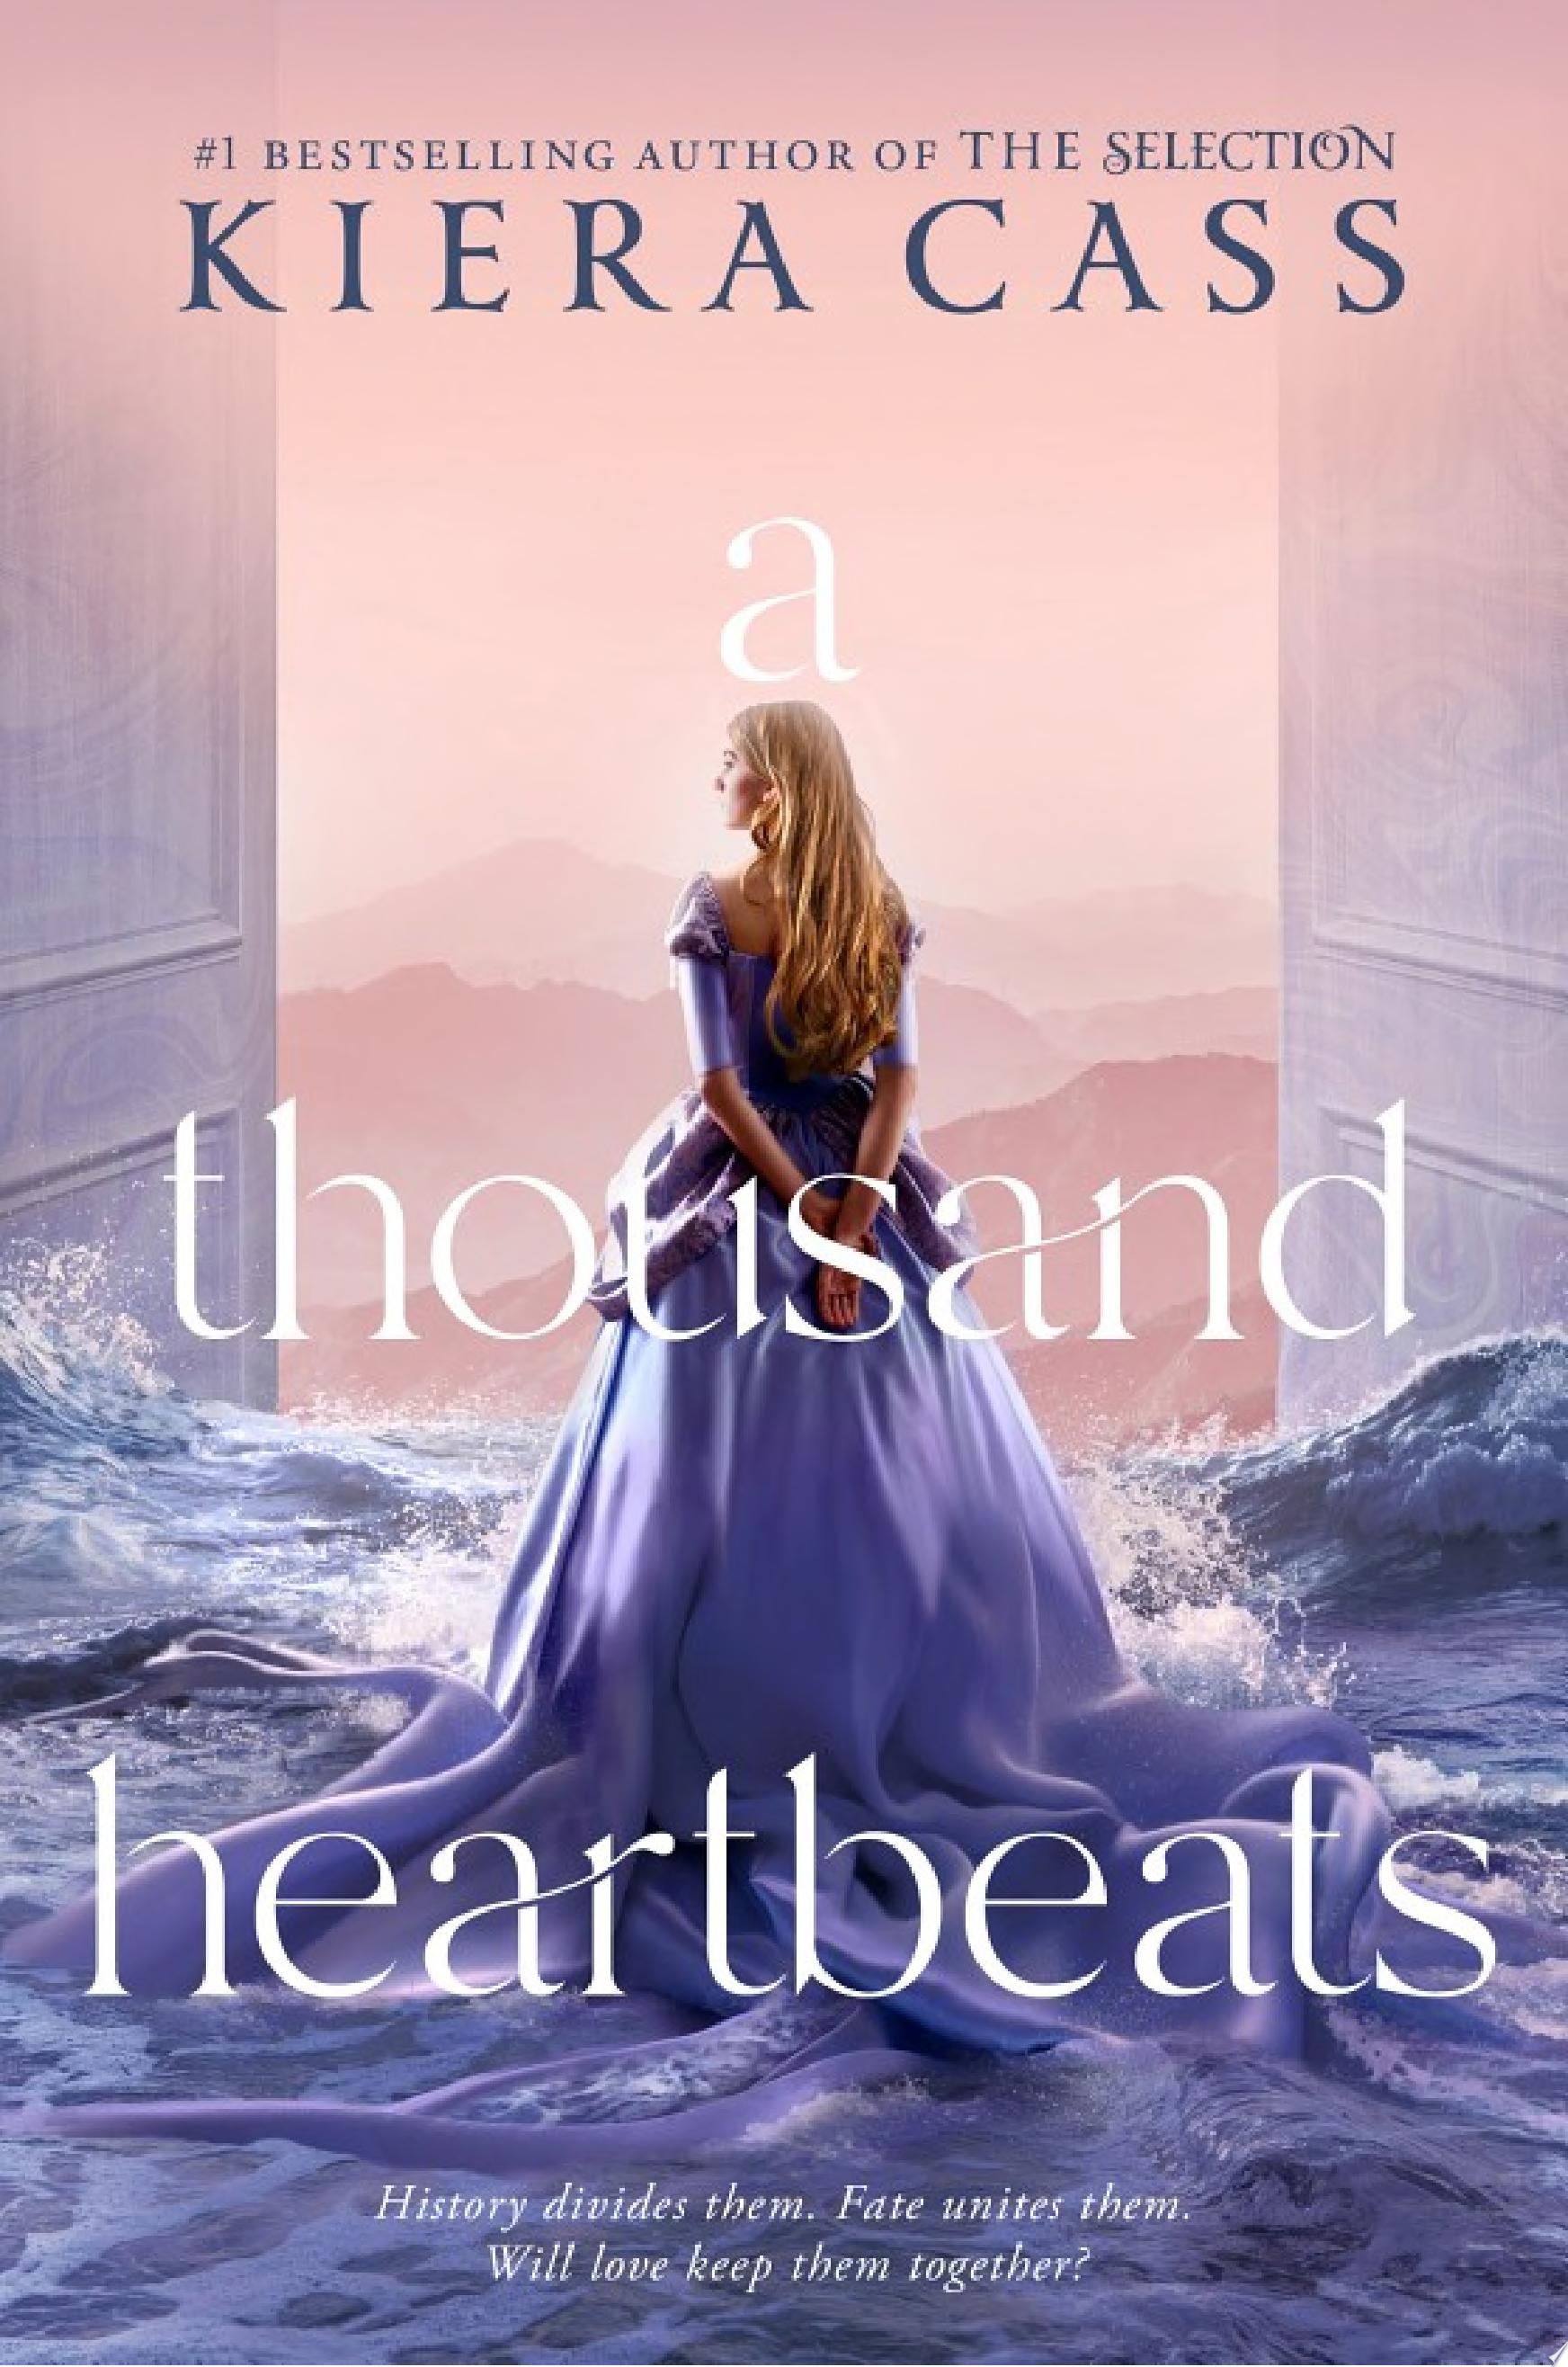 Image for "A Thousand Heartbeats"